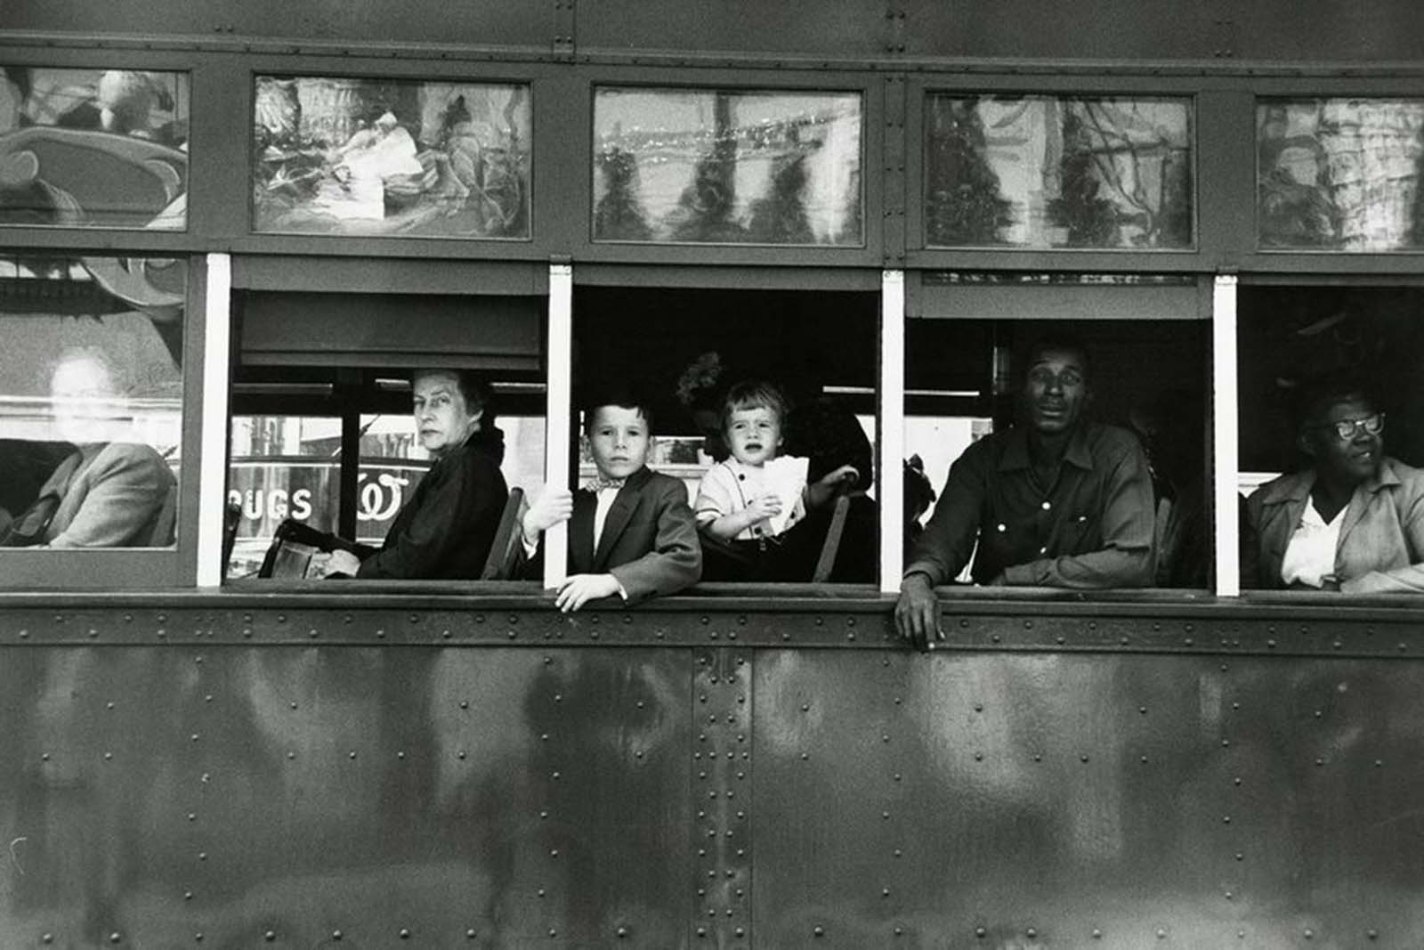 Trolley—New Orleans, Robert Frank